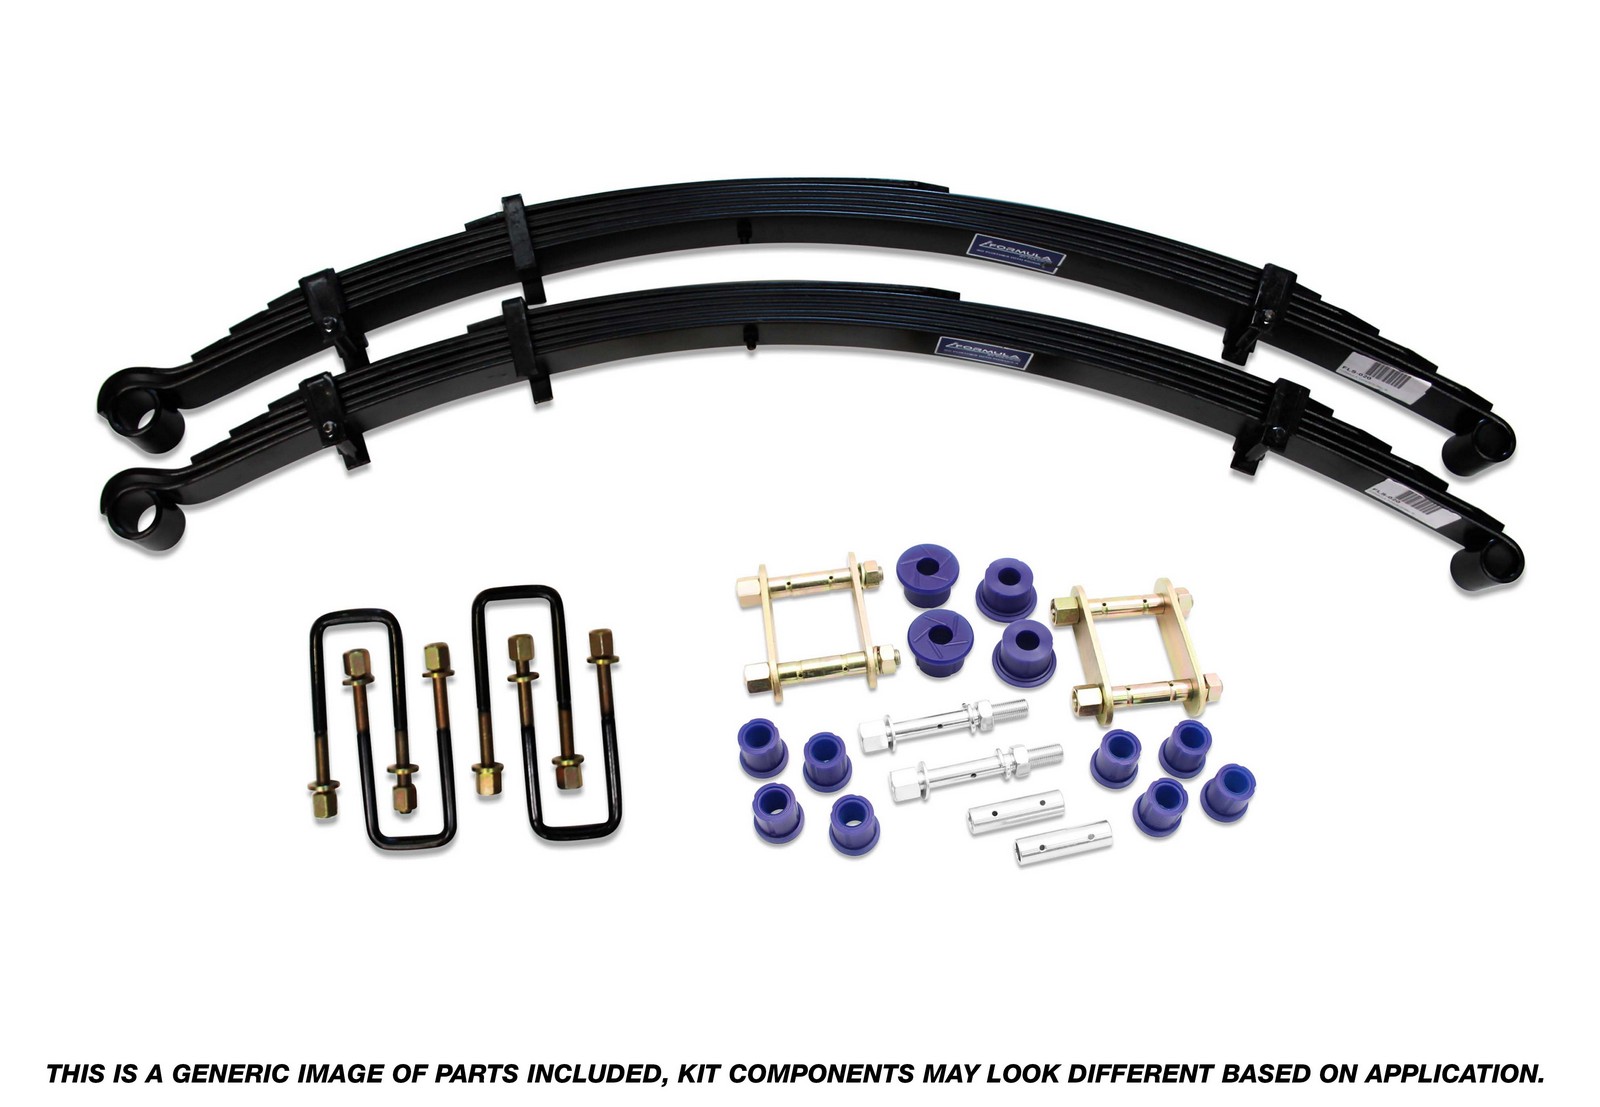 Formula Rear Leaf Spring Kit - 50mm Lift at 0-300kg to suit Ford Ranger PX III